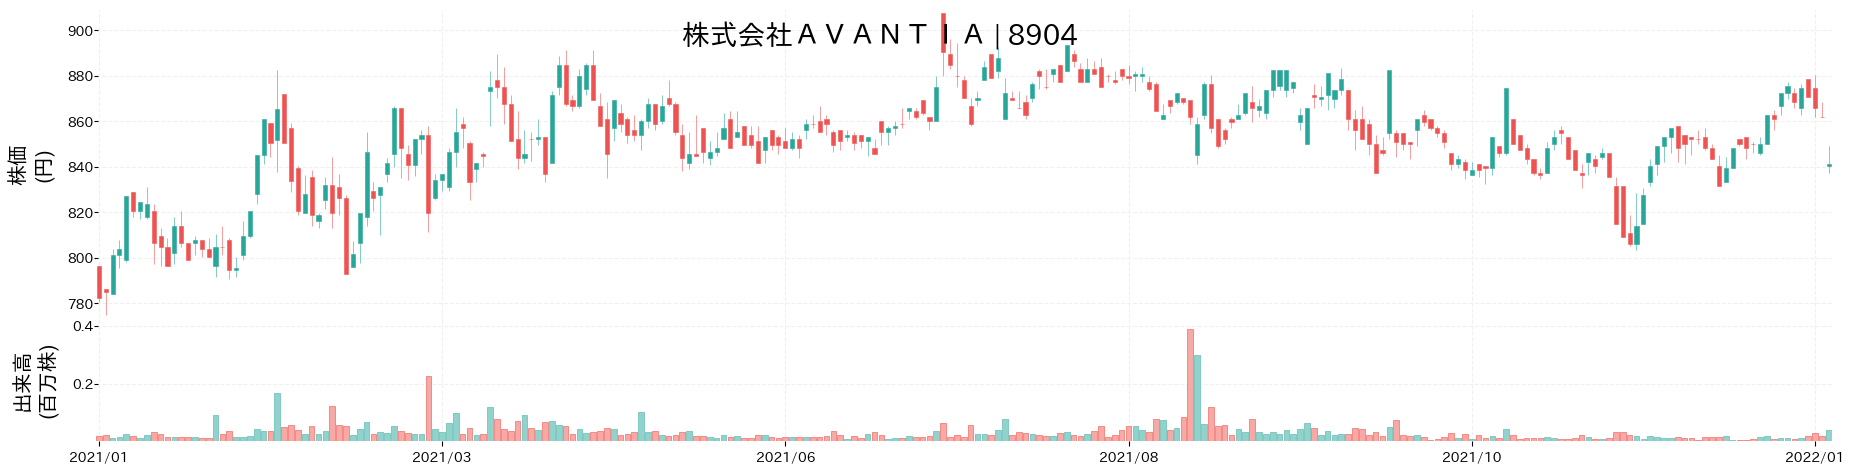 AVANTIAの株価推移(2021)